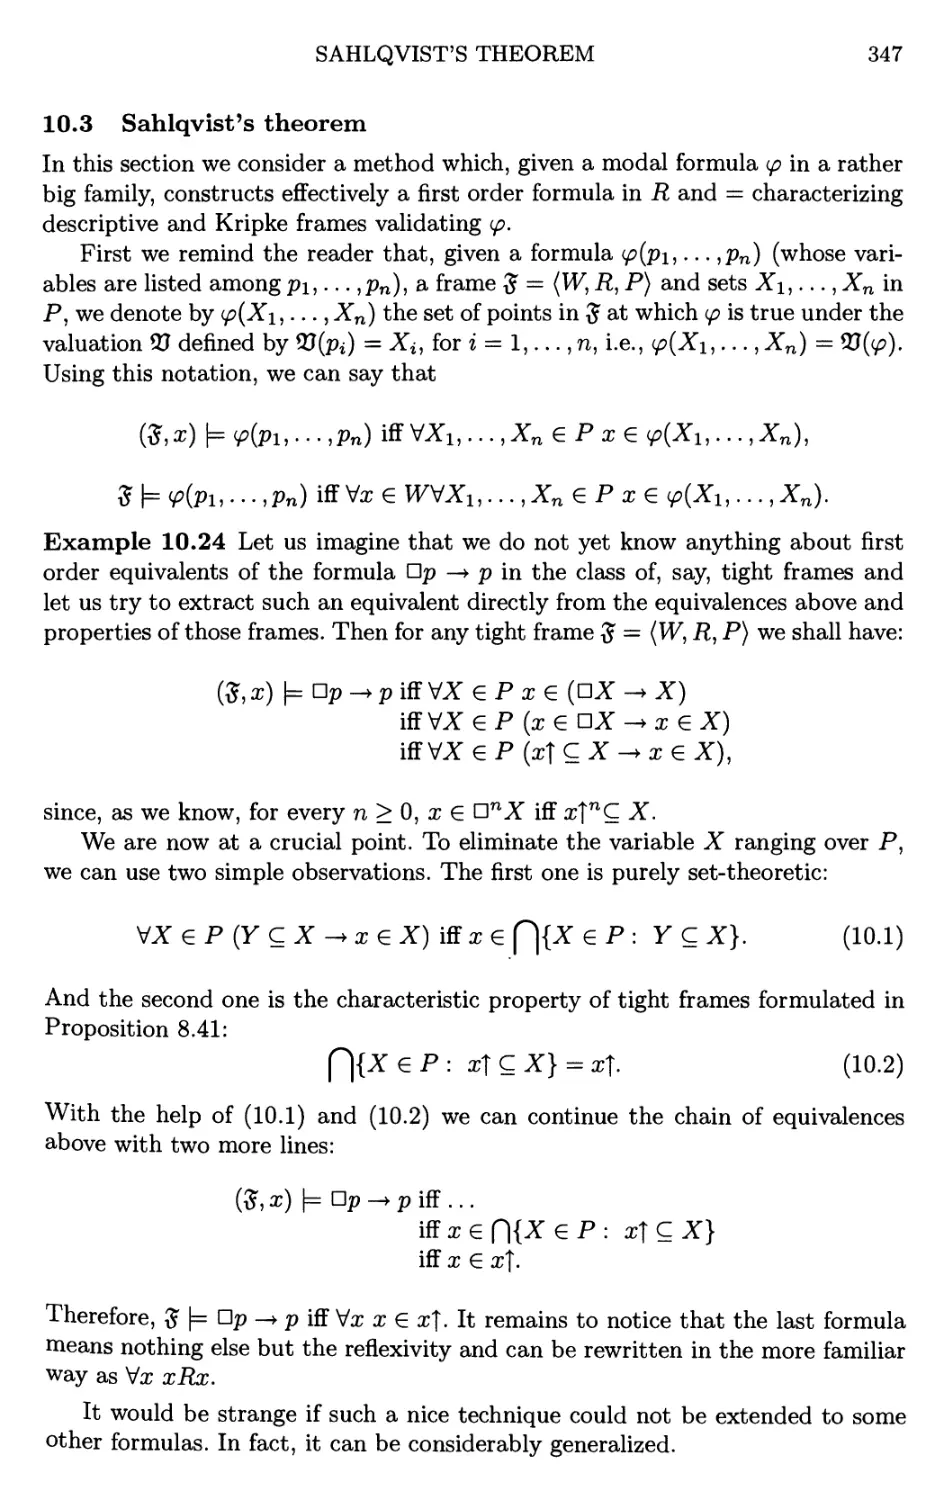 10.3 Sahlqvist's theorem